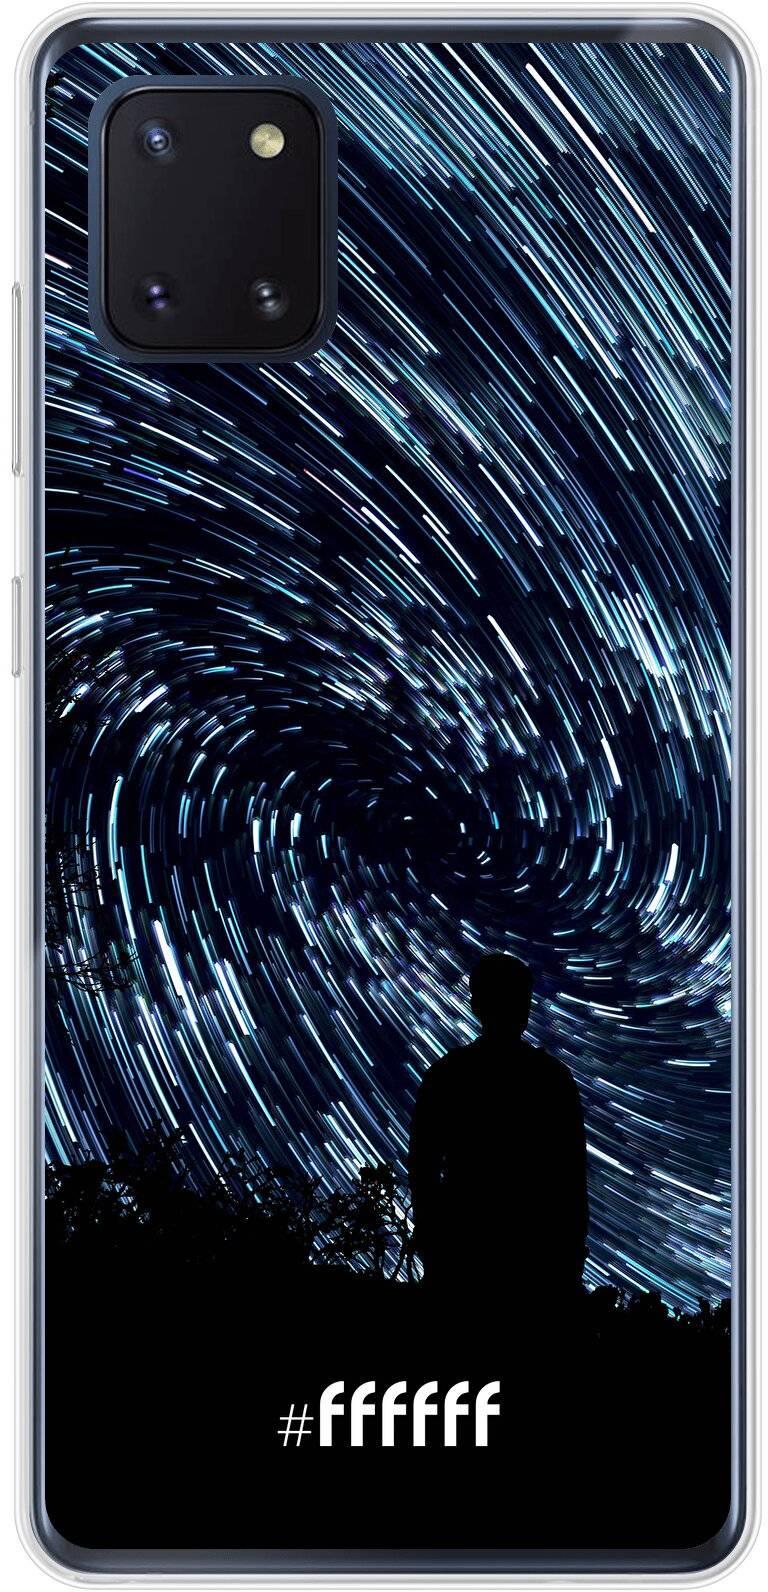 Starry Circles Galaxy Note 10 Lite